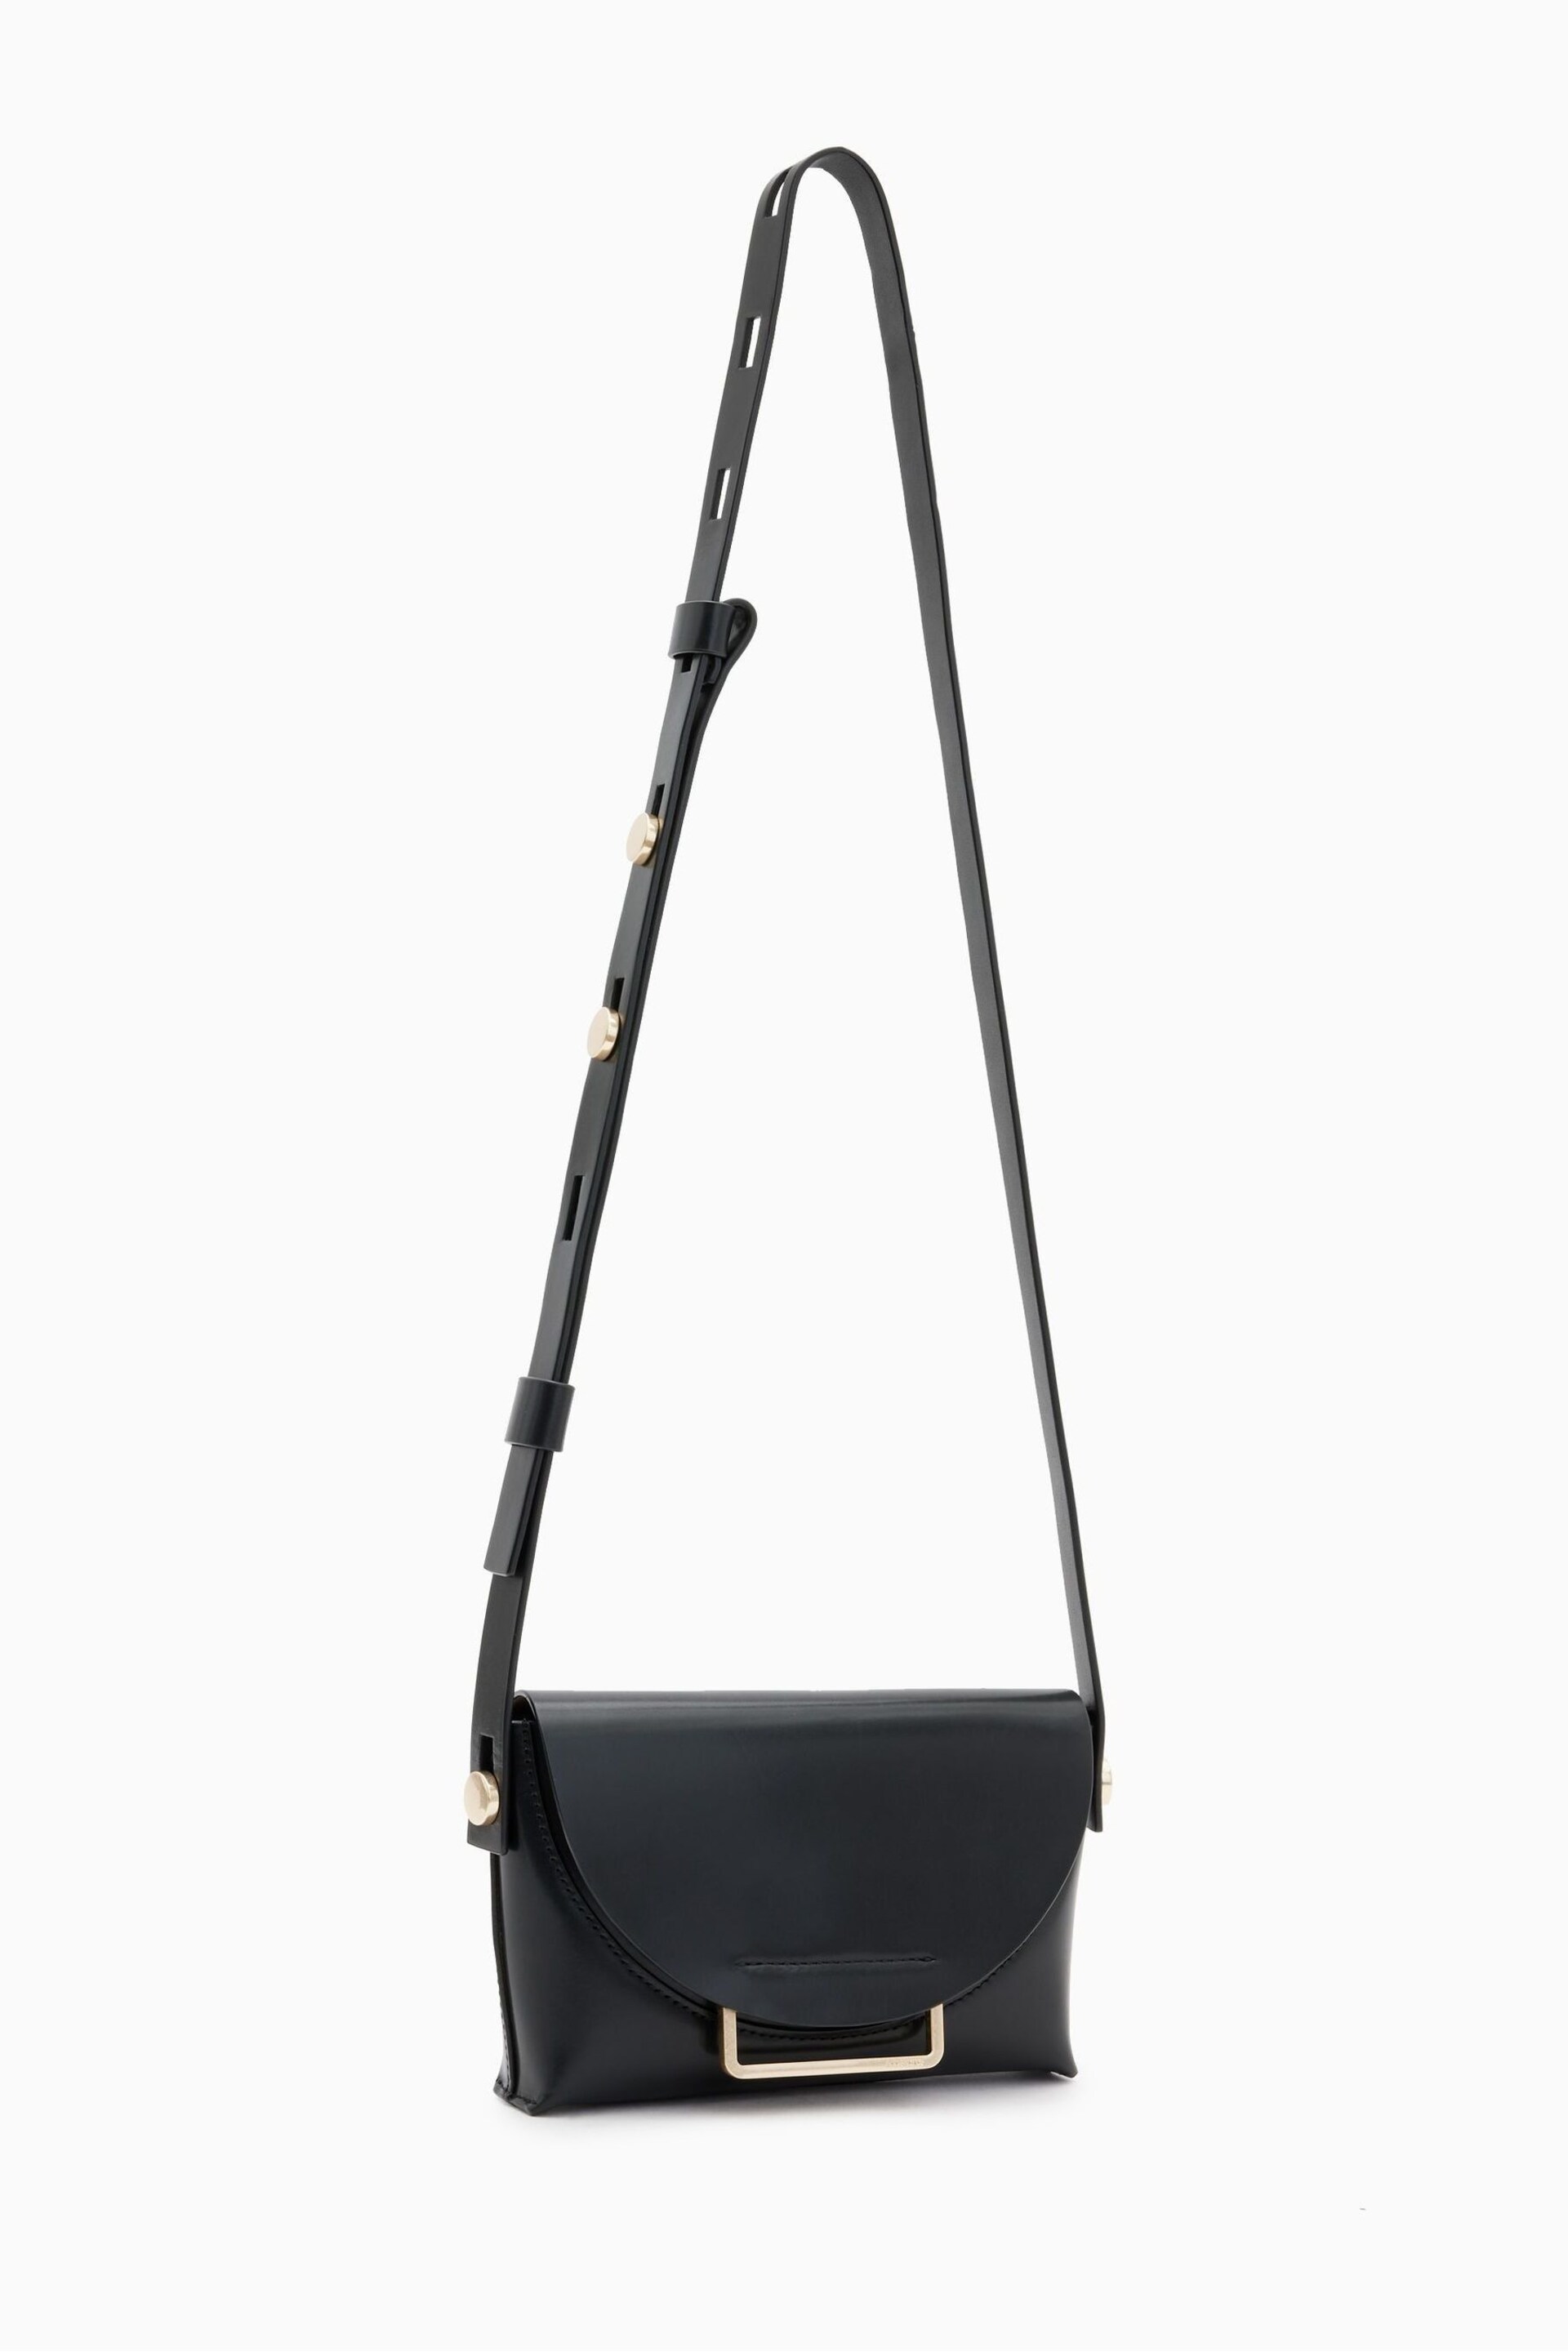 AllSaints Black Cross-Body Francine Bag - Image 5 of 8